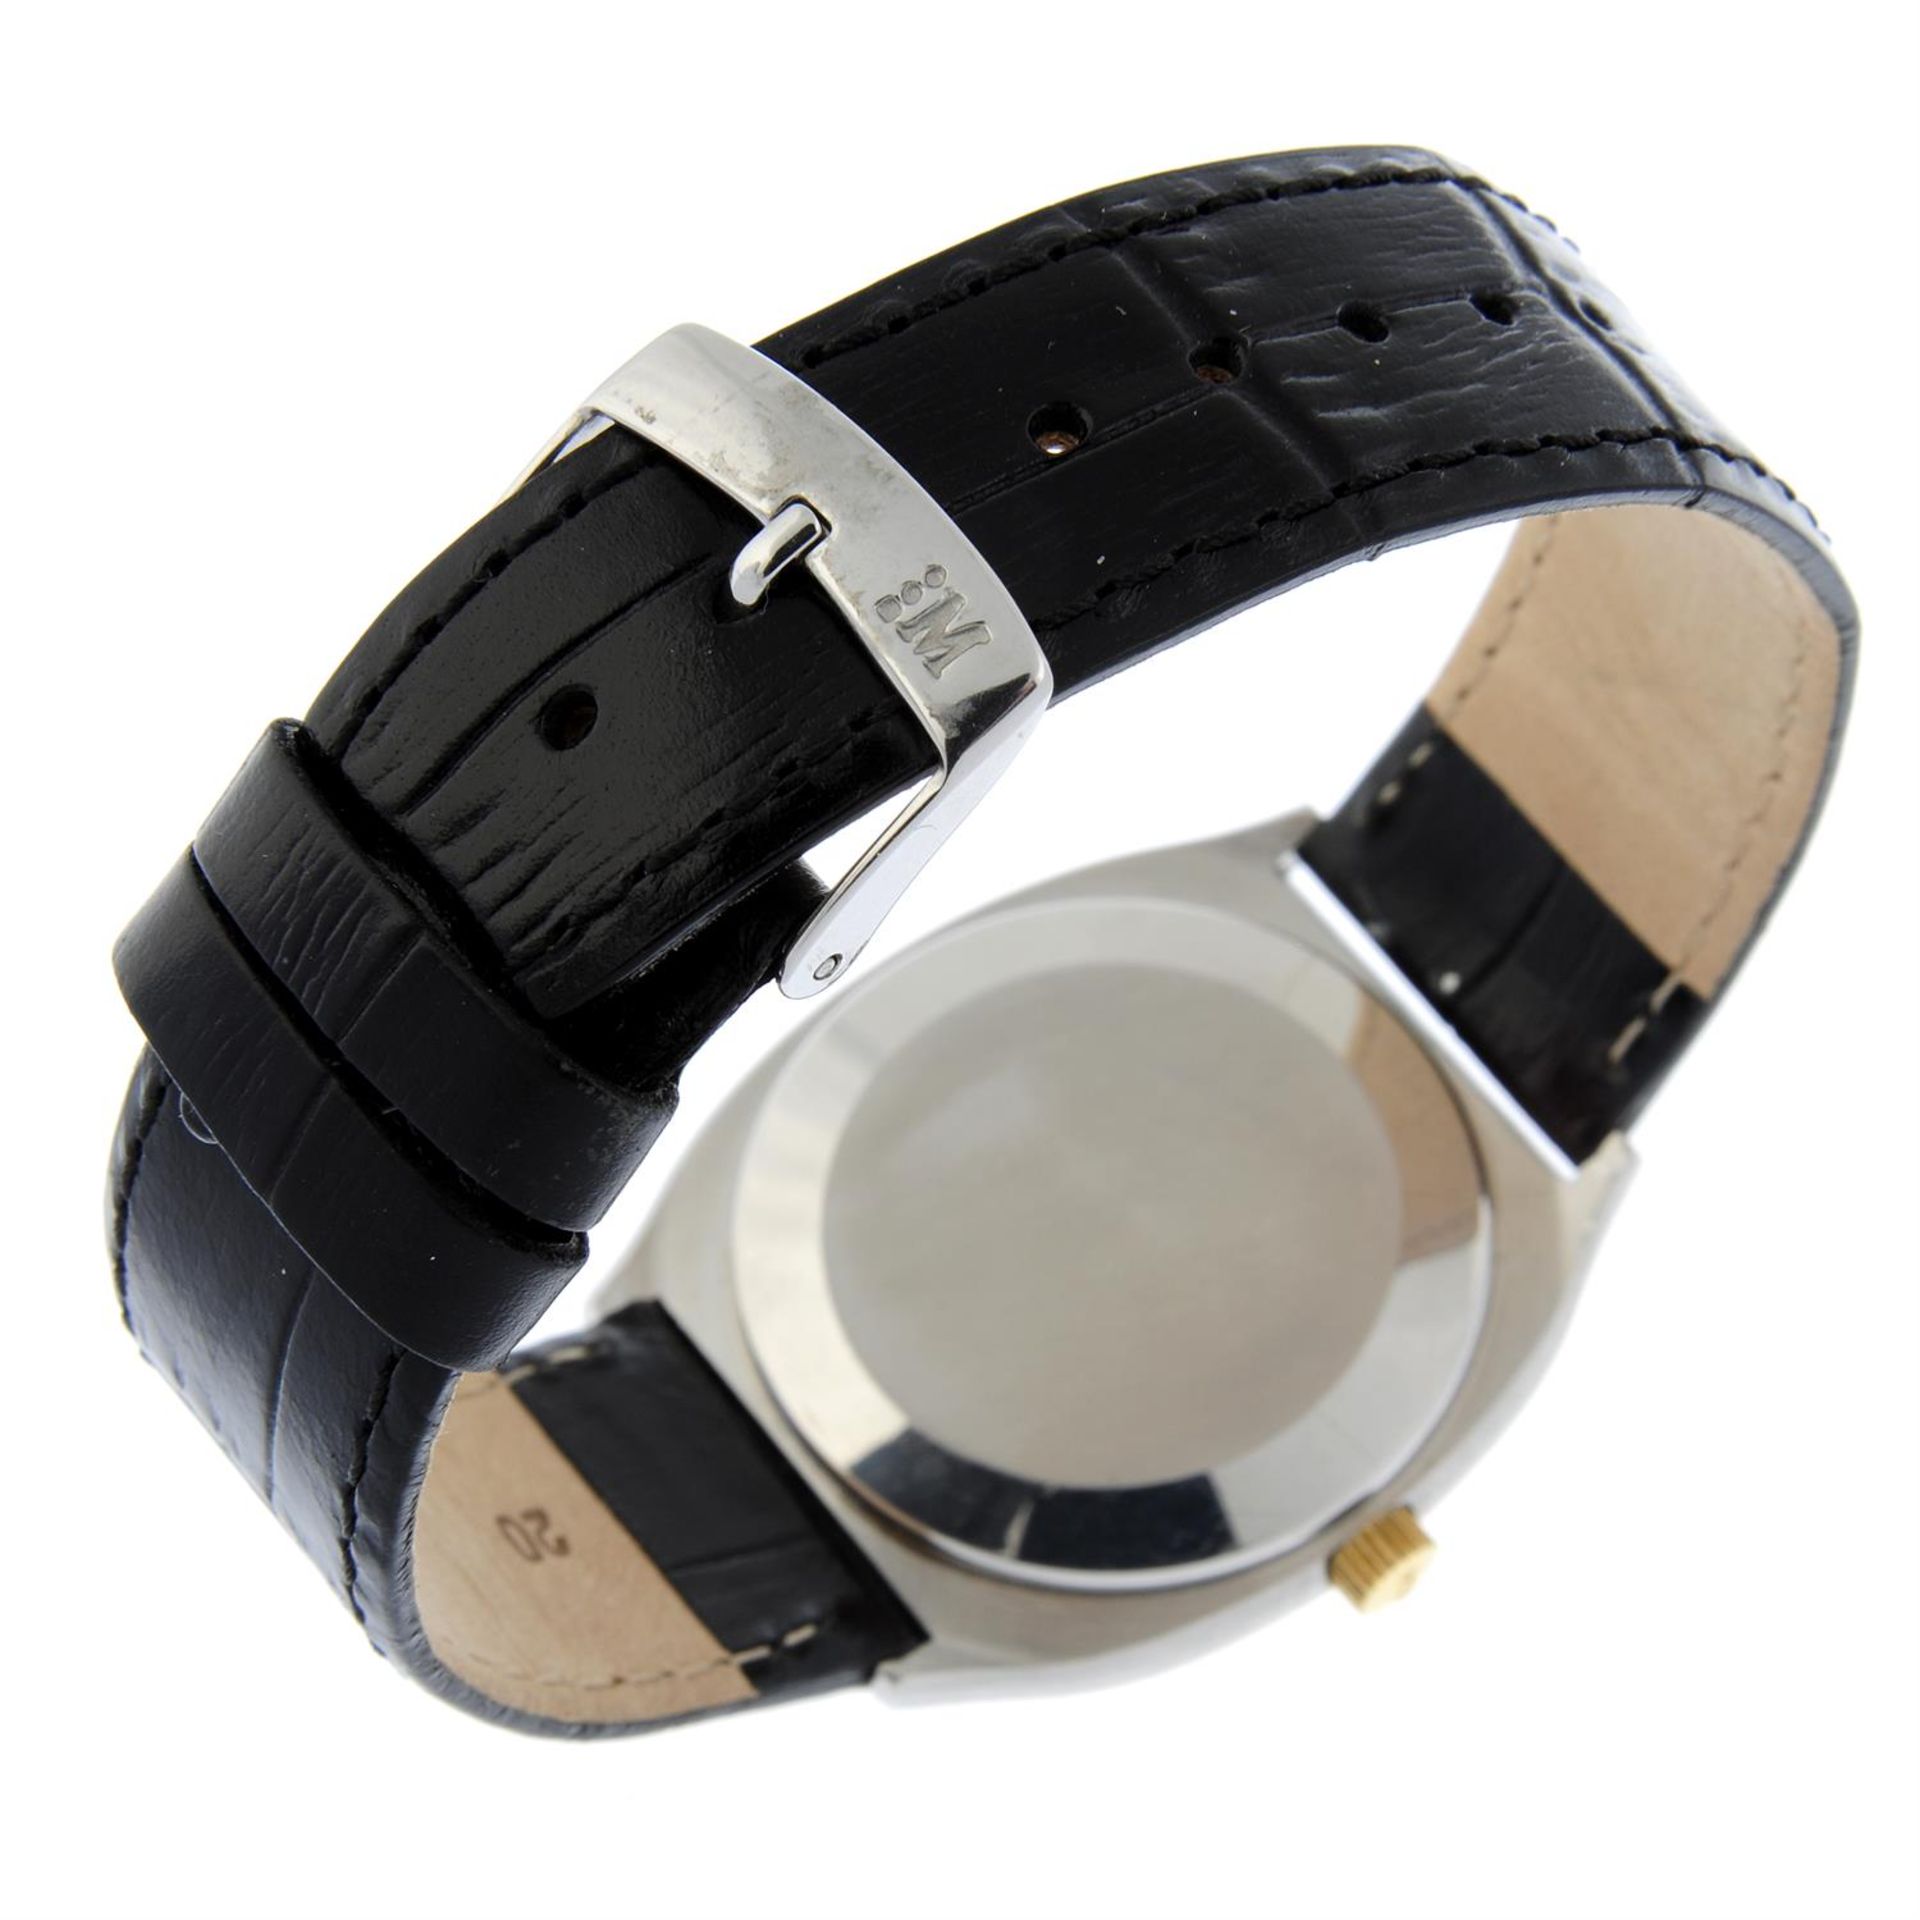 IWC - a bi-metal wrist watch, 36mm. - Image 2 of 5